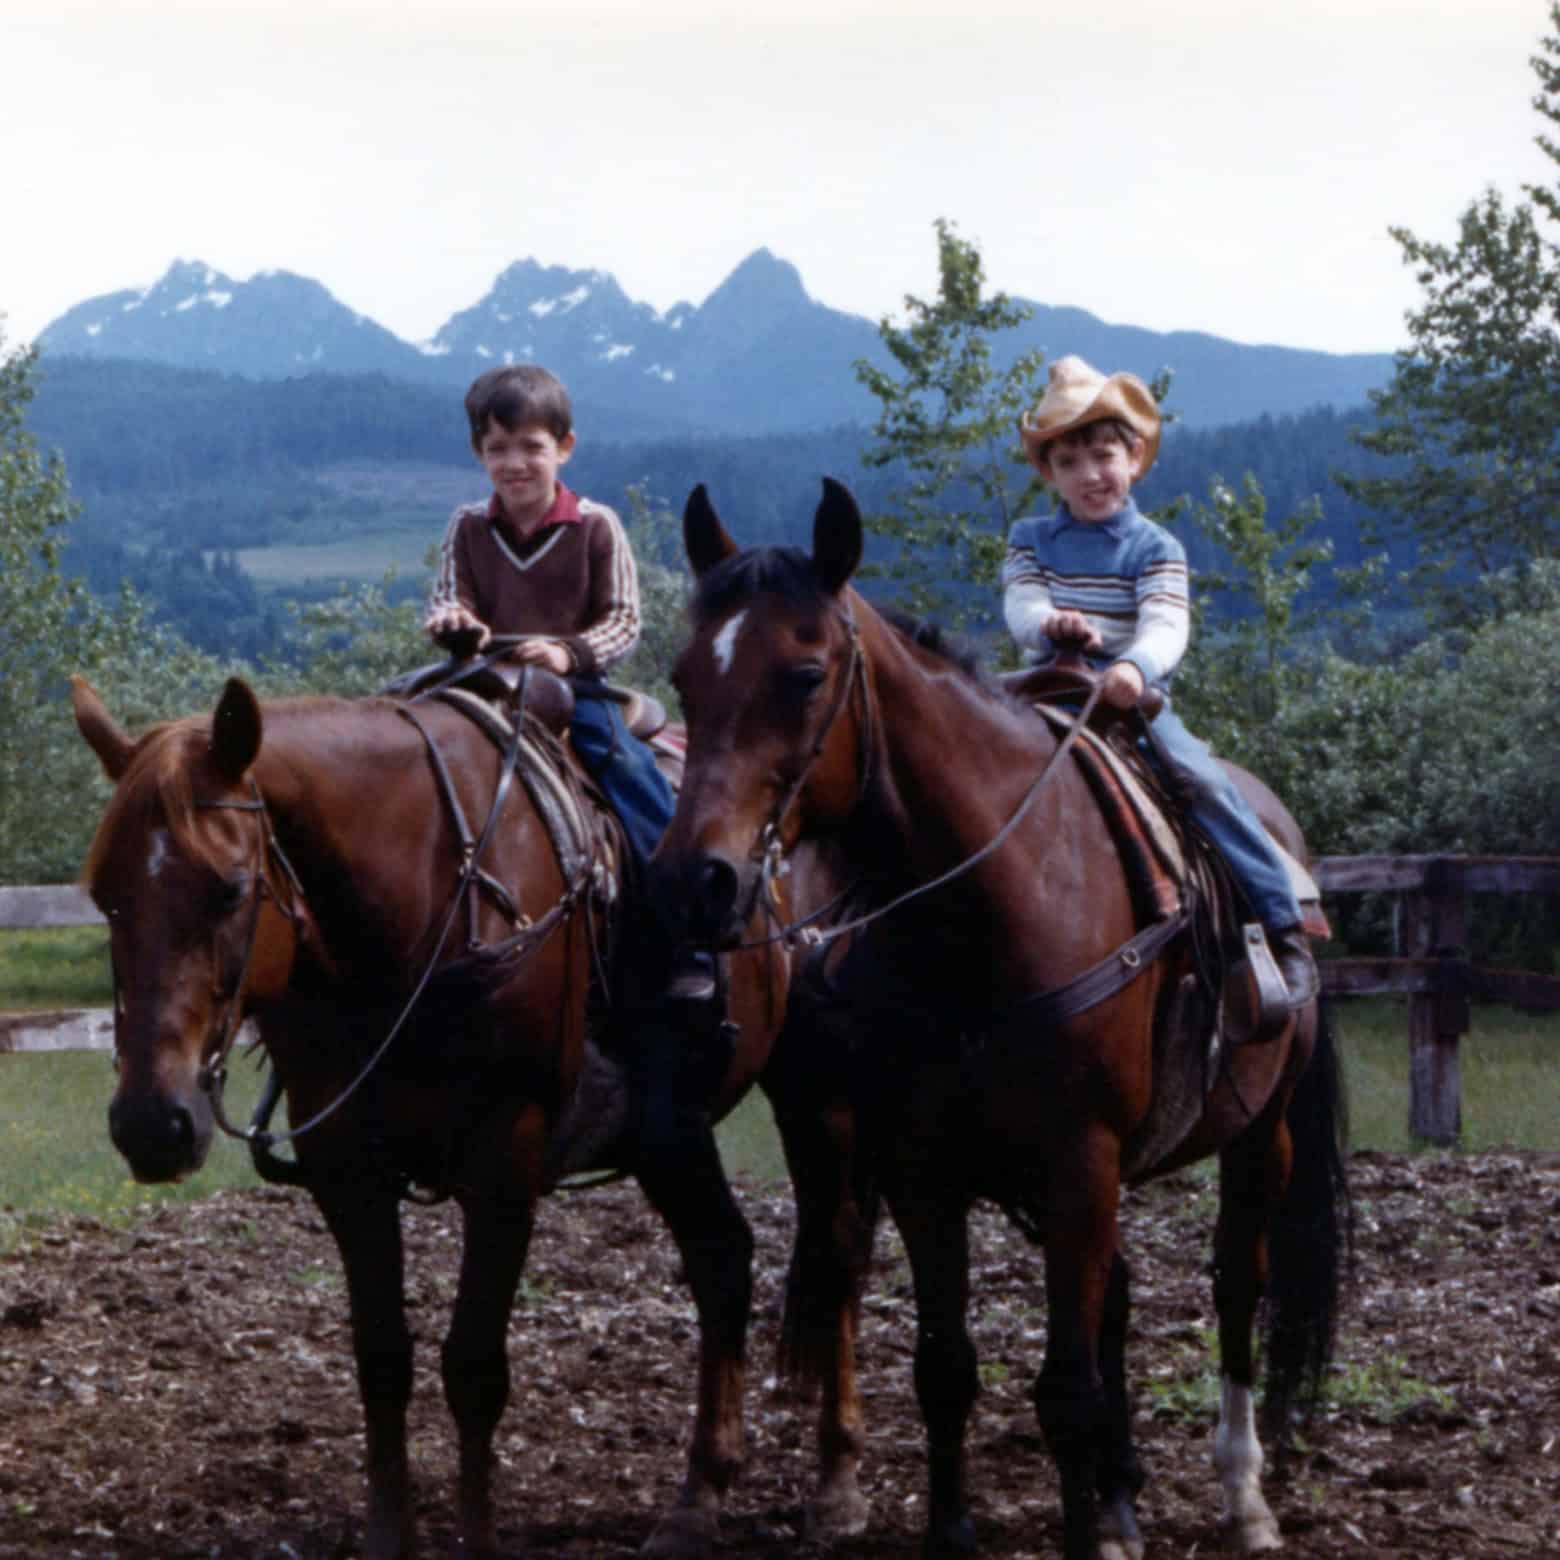 drew and jonathan on horseback as kids